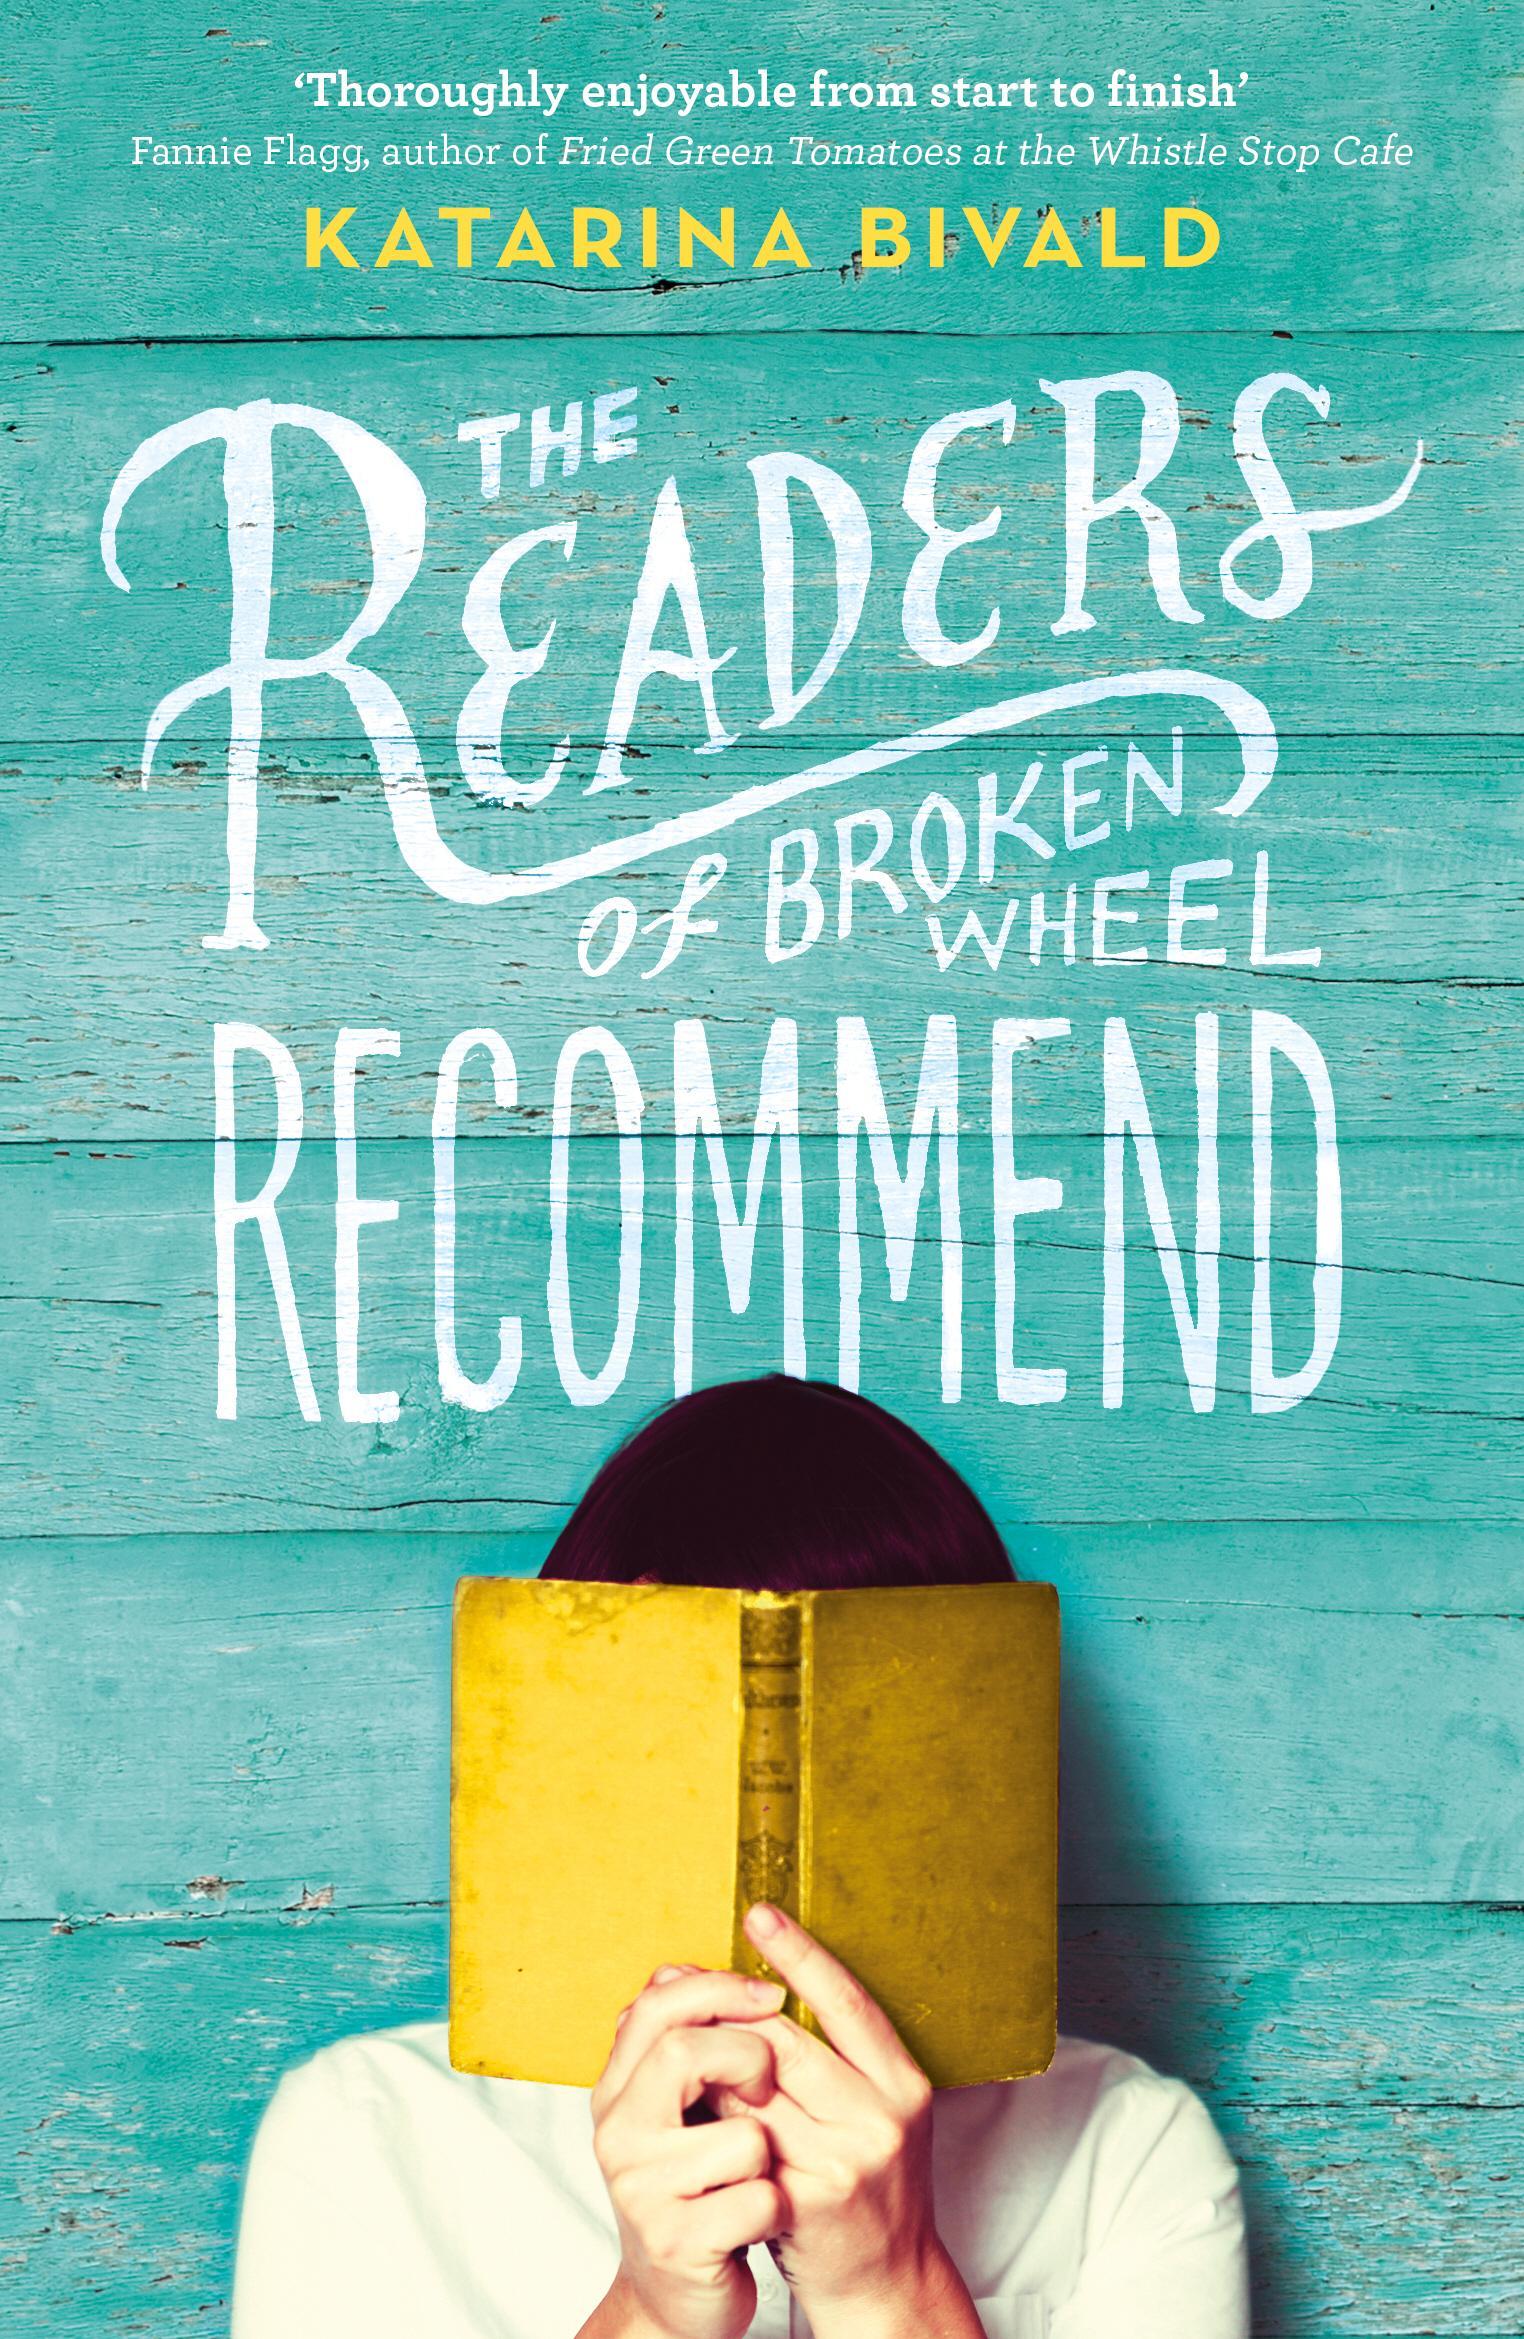 Readers of Broken Wheel Recommend - Katarina Bivald